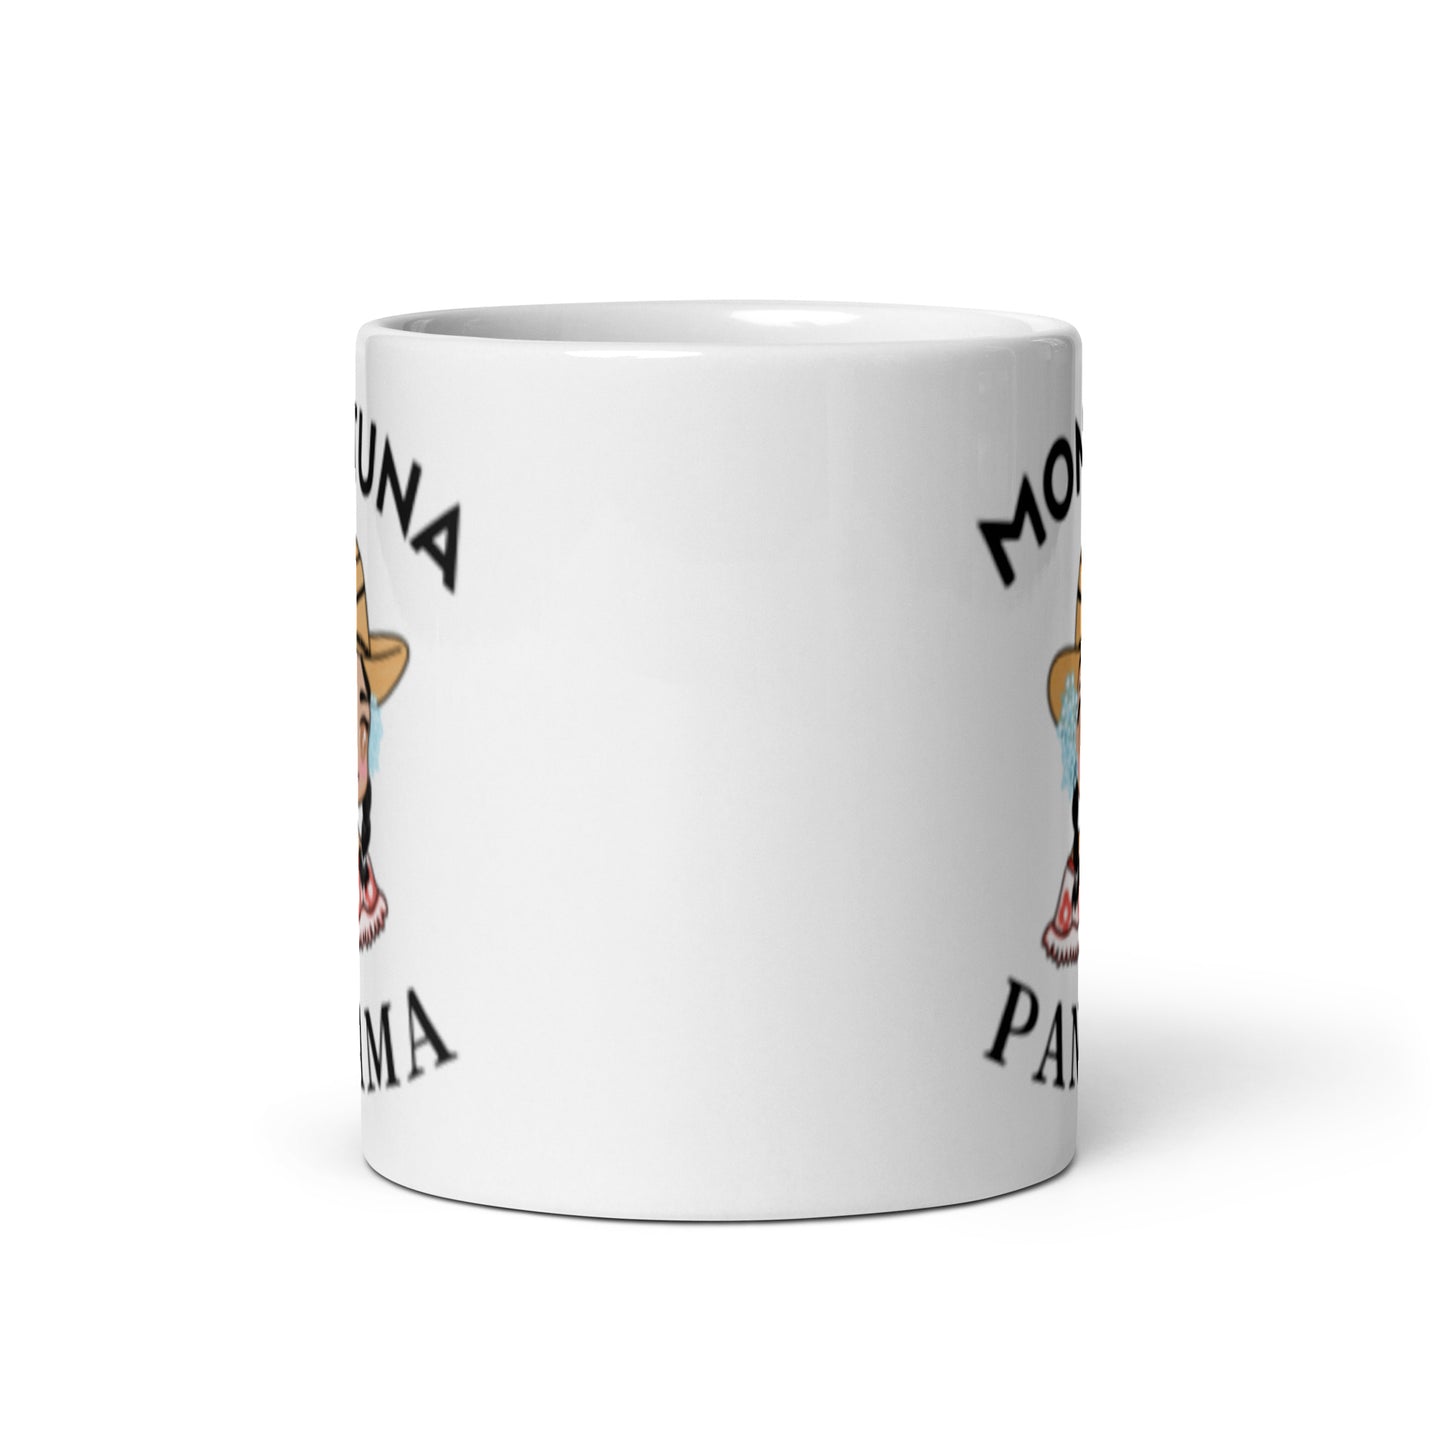 Panama Montuna Coffe Mug